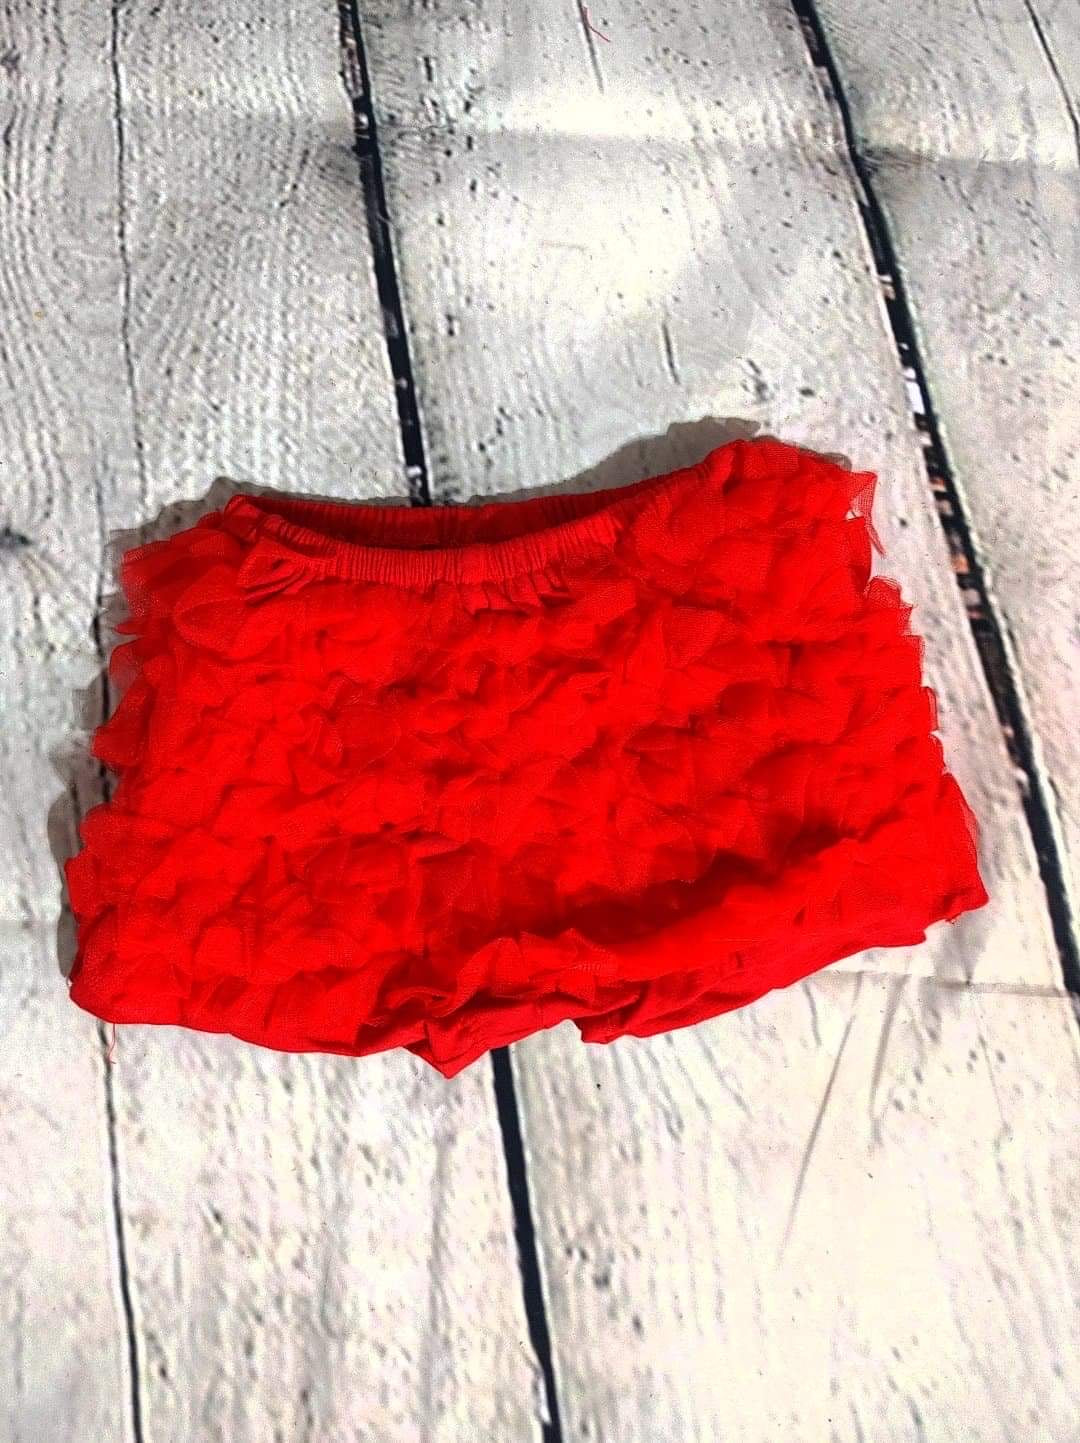 Red Ruffled Shorts